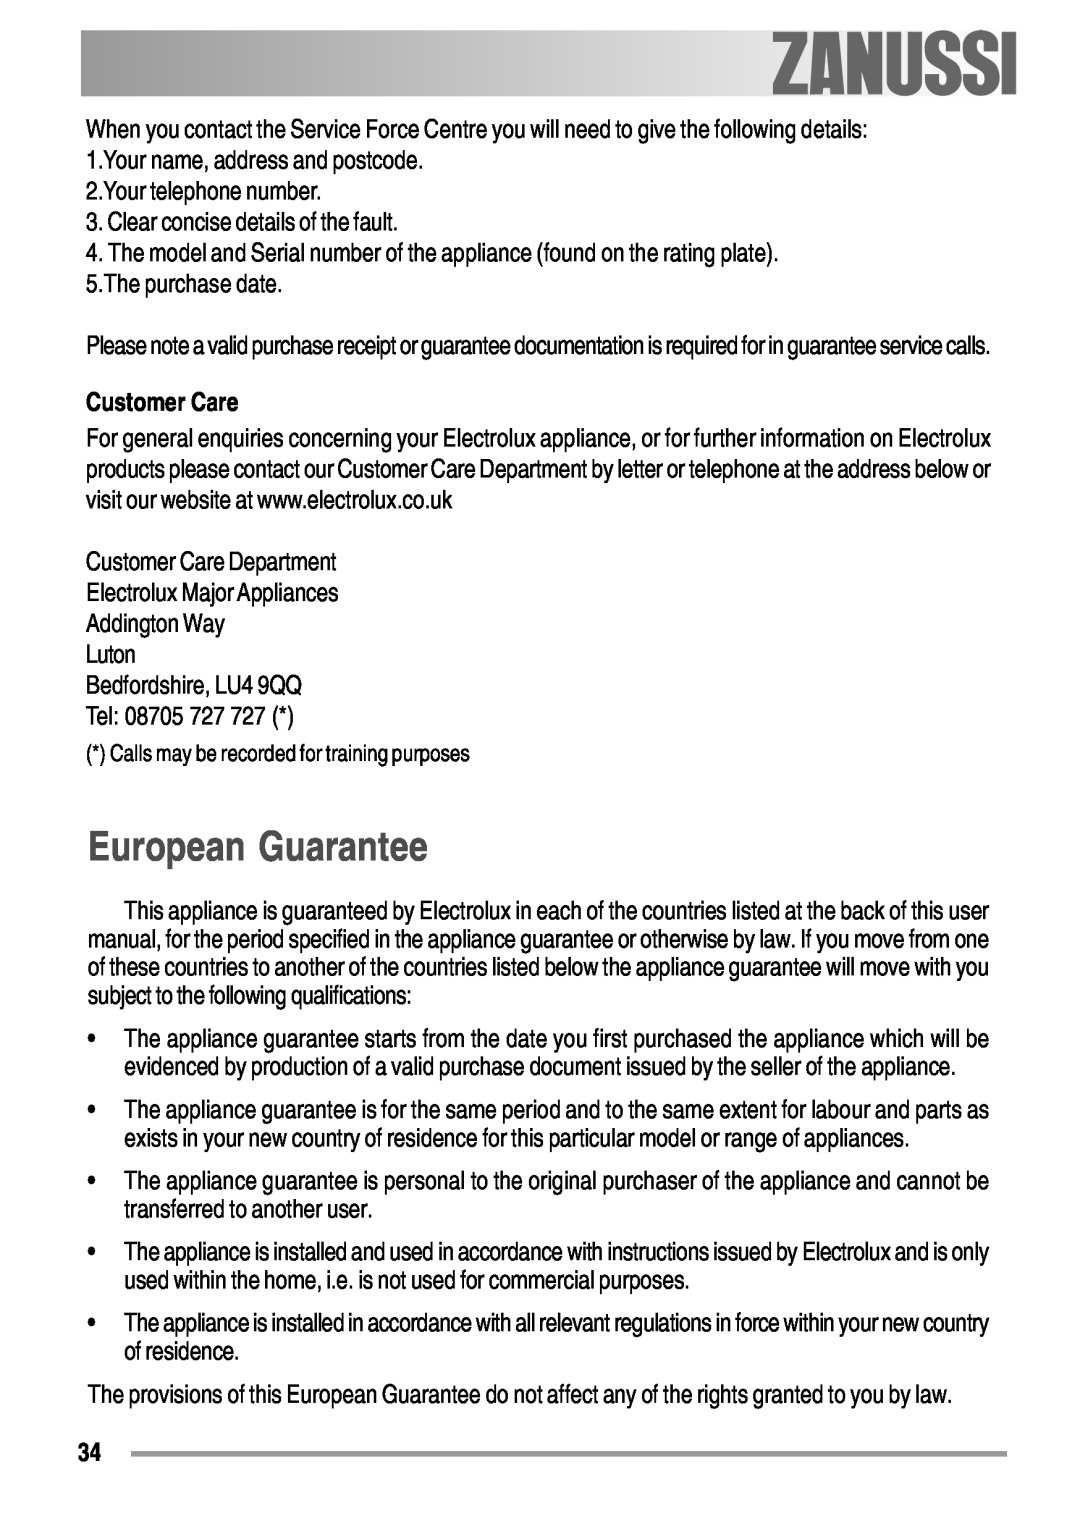 Zanussi ZOB 550 user manual European Guarantee, Customer Care 